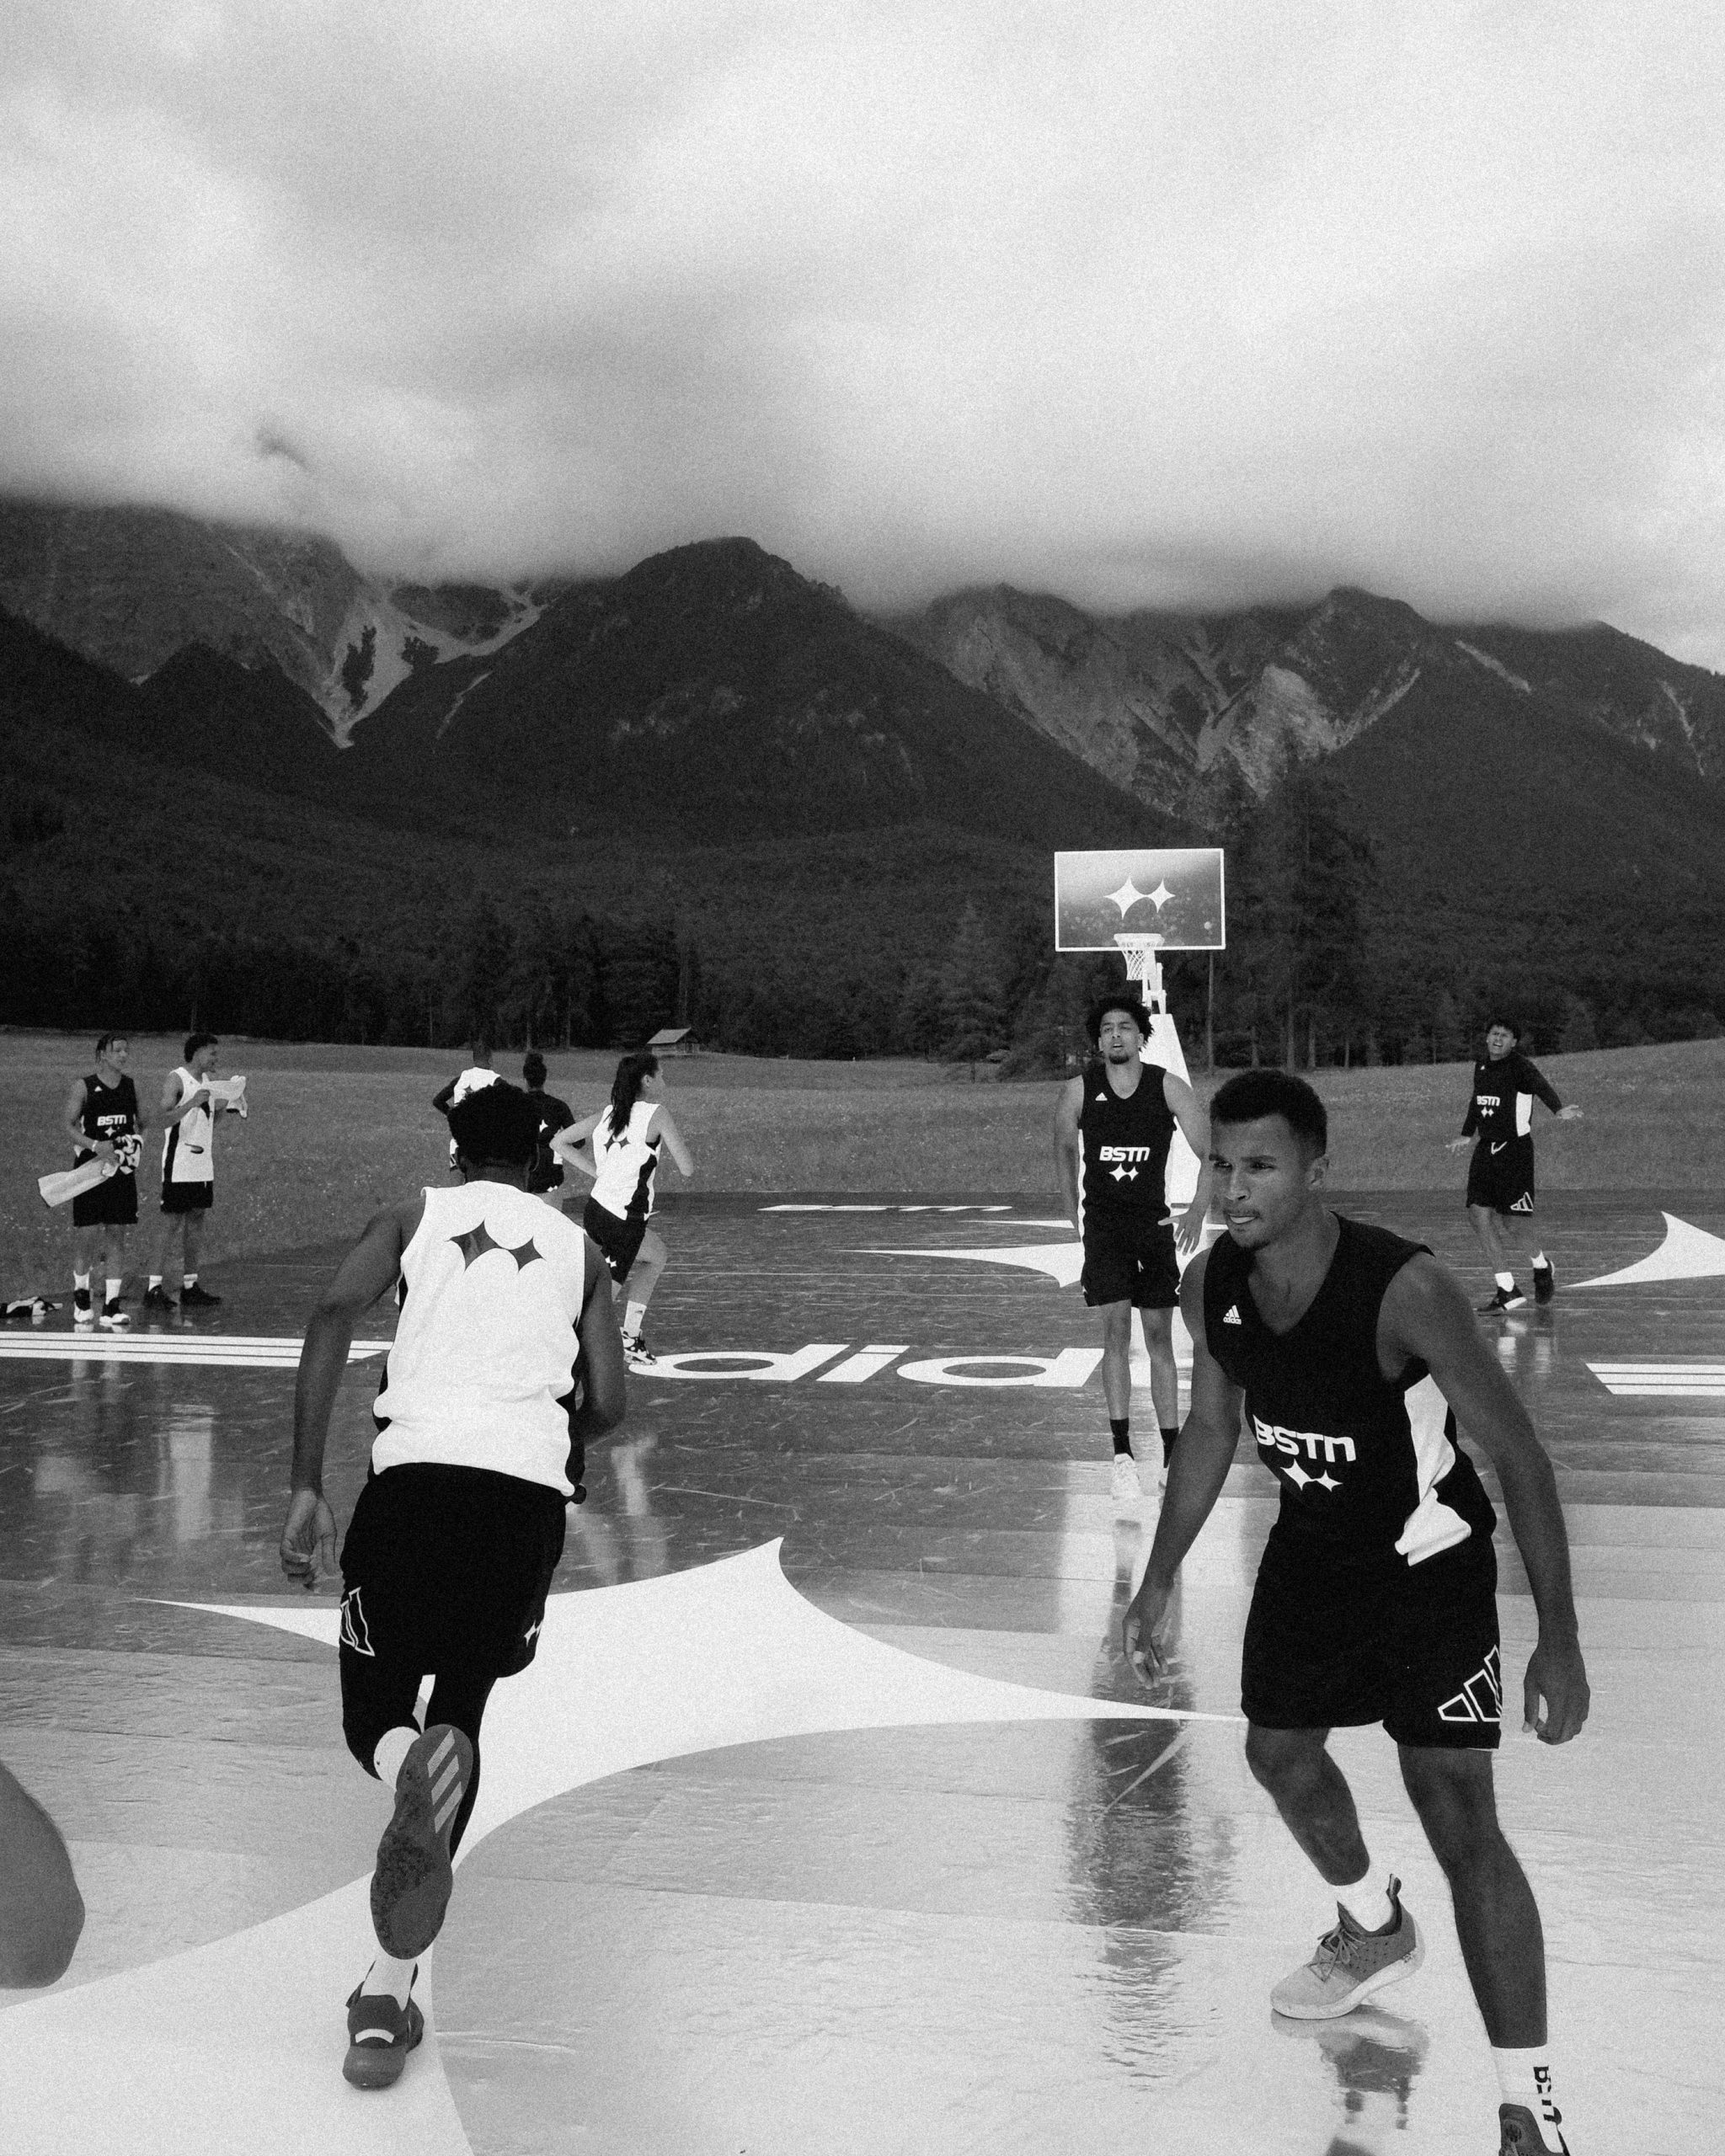 Agarrar Pronombre En general BSTN Brand and adidas Celebrate the Game with Alpine Basketball Court | SLAM